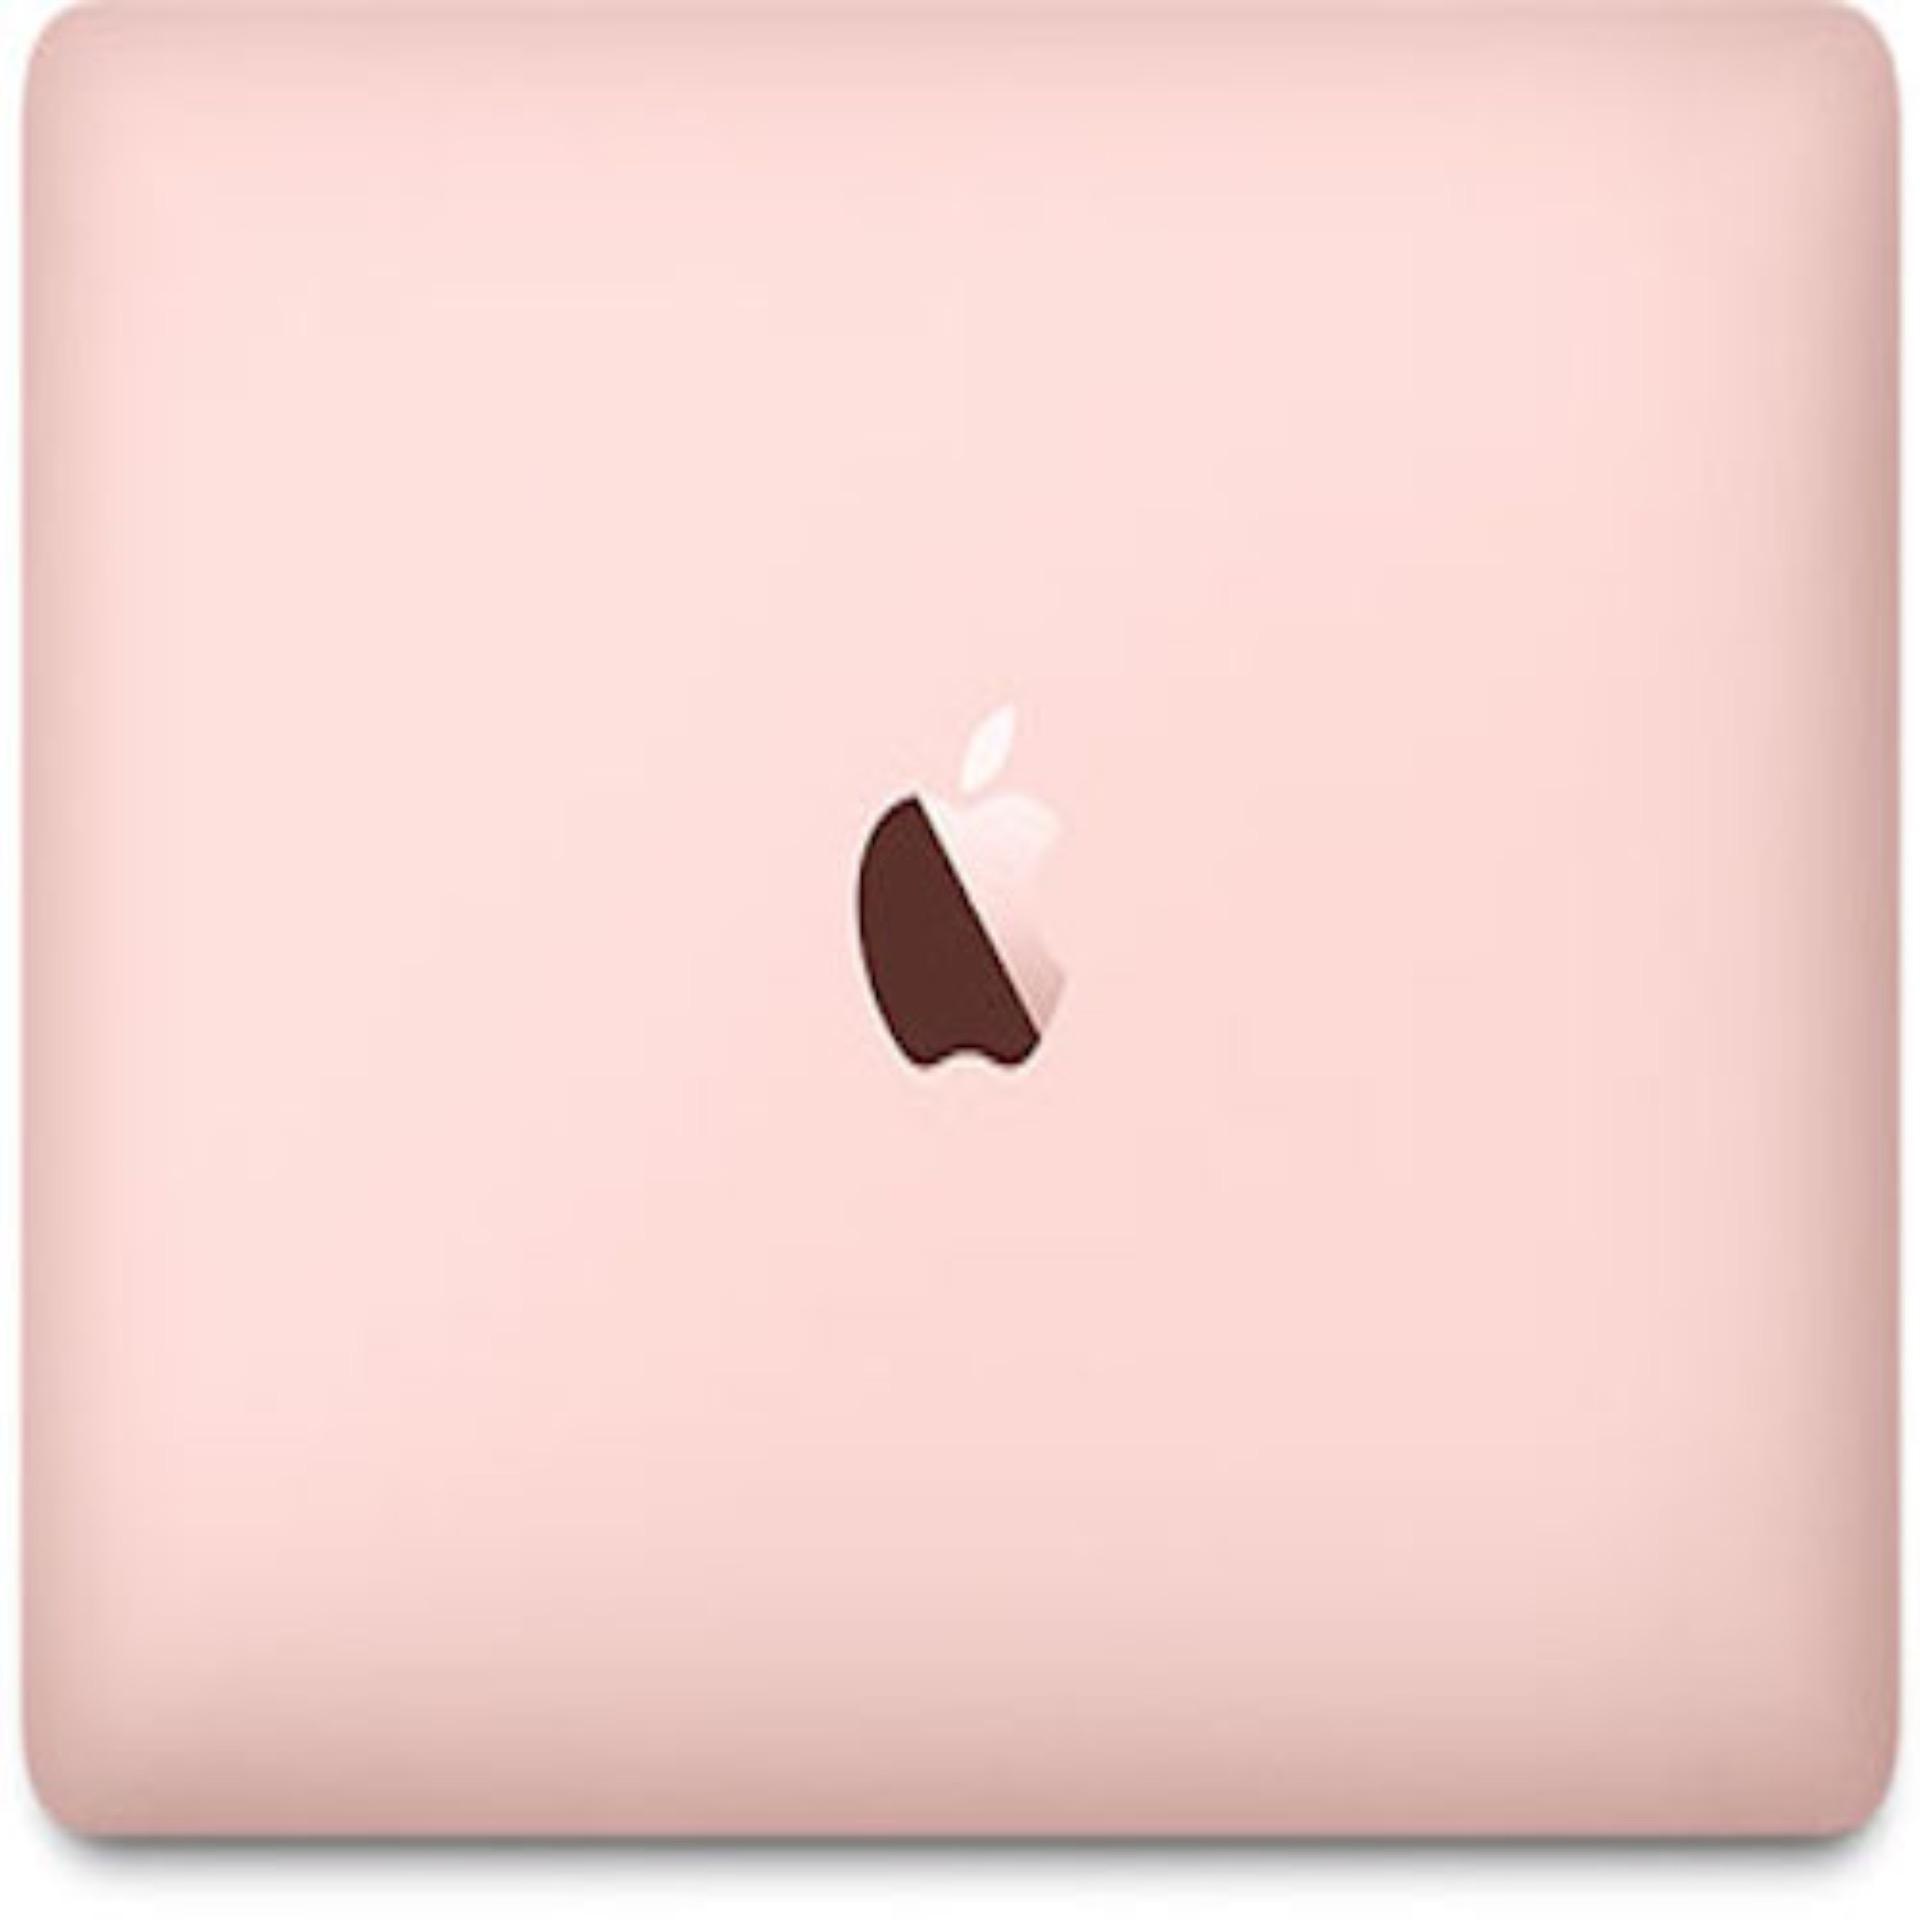 New Macbook 12 inch 256Gb 2017